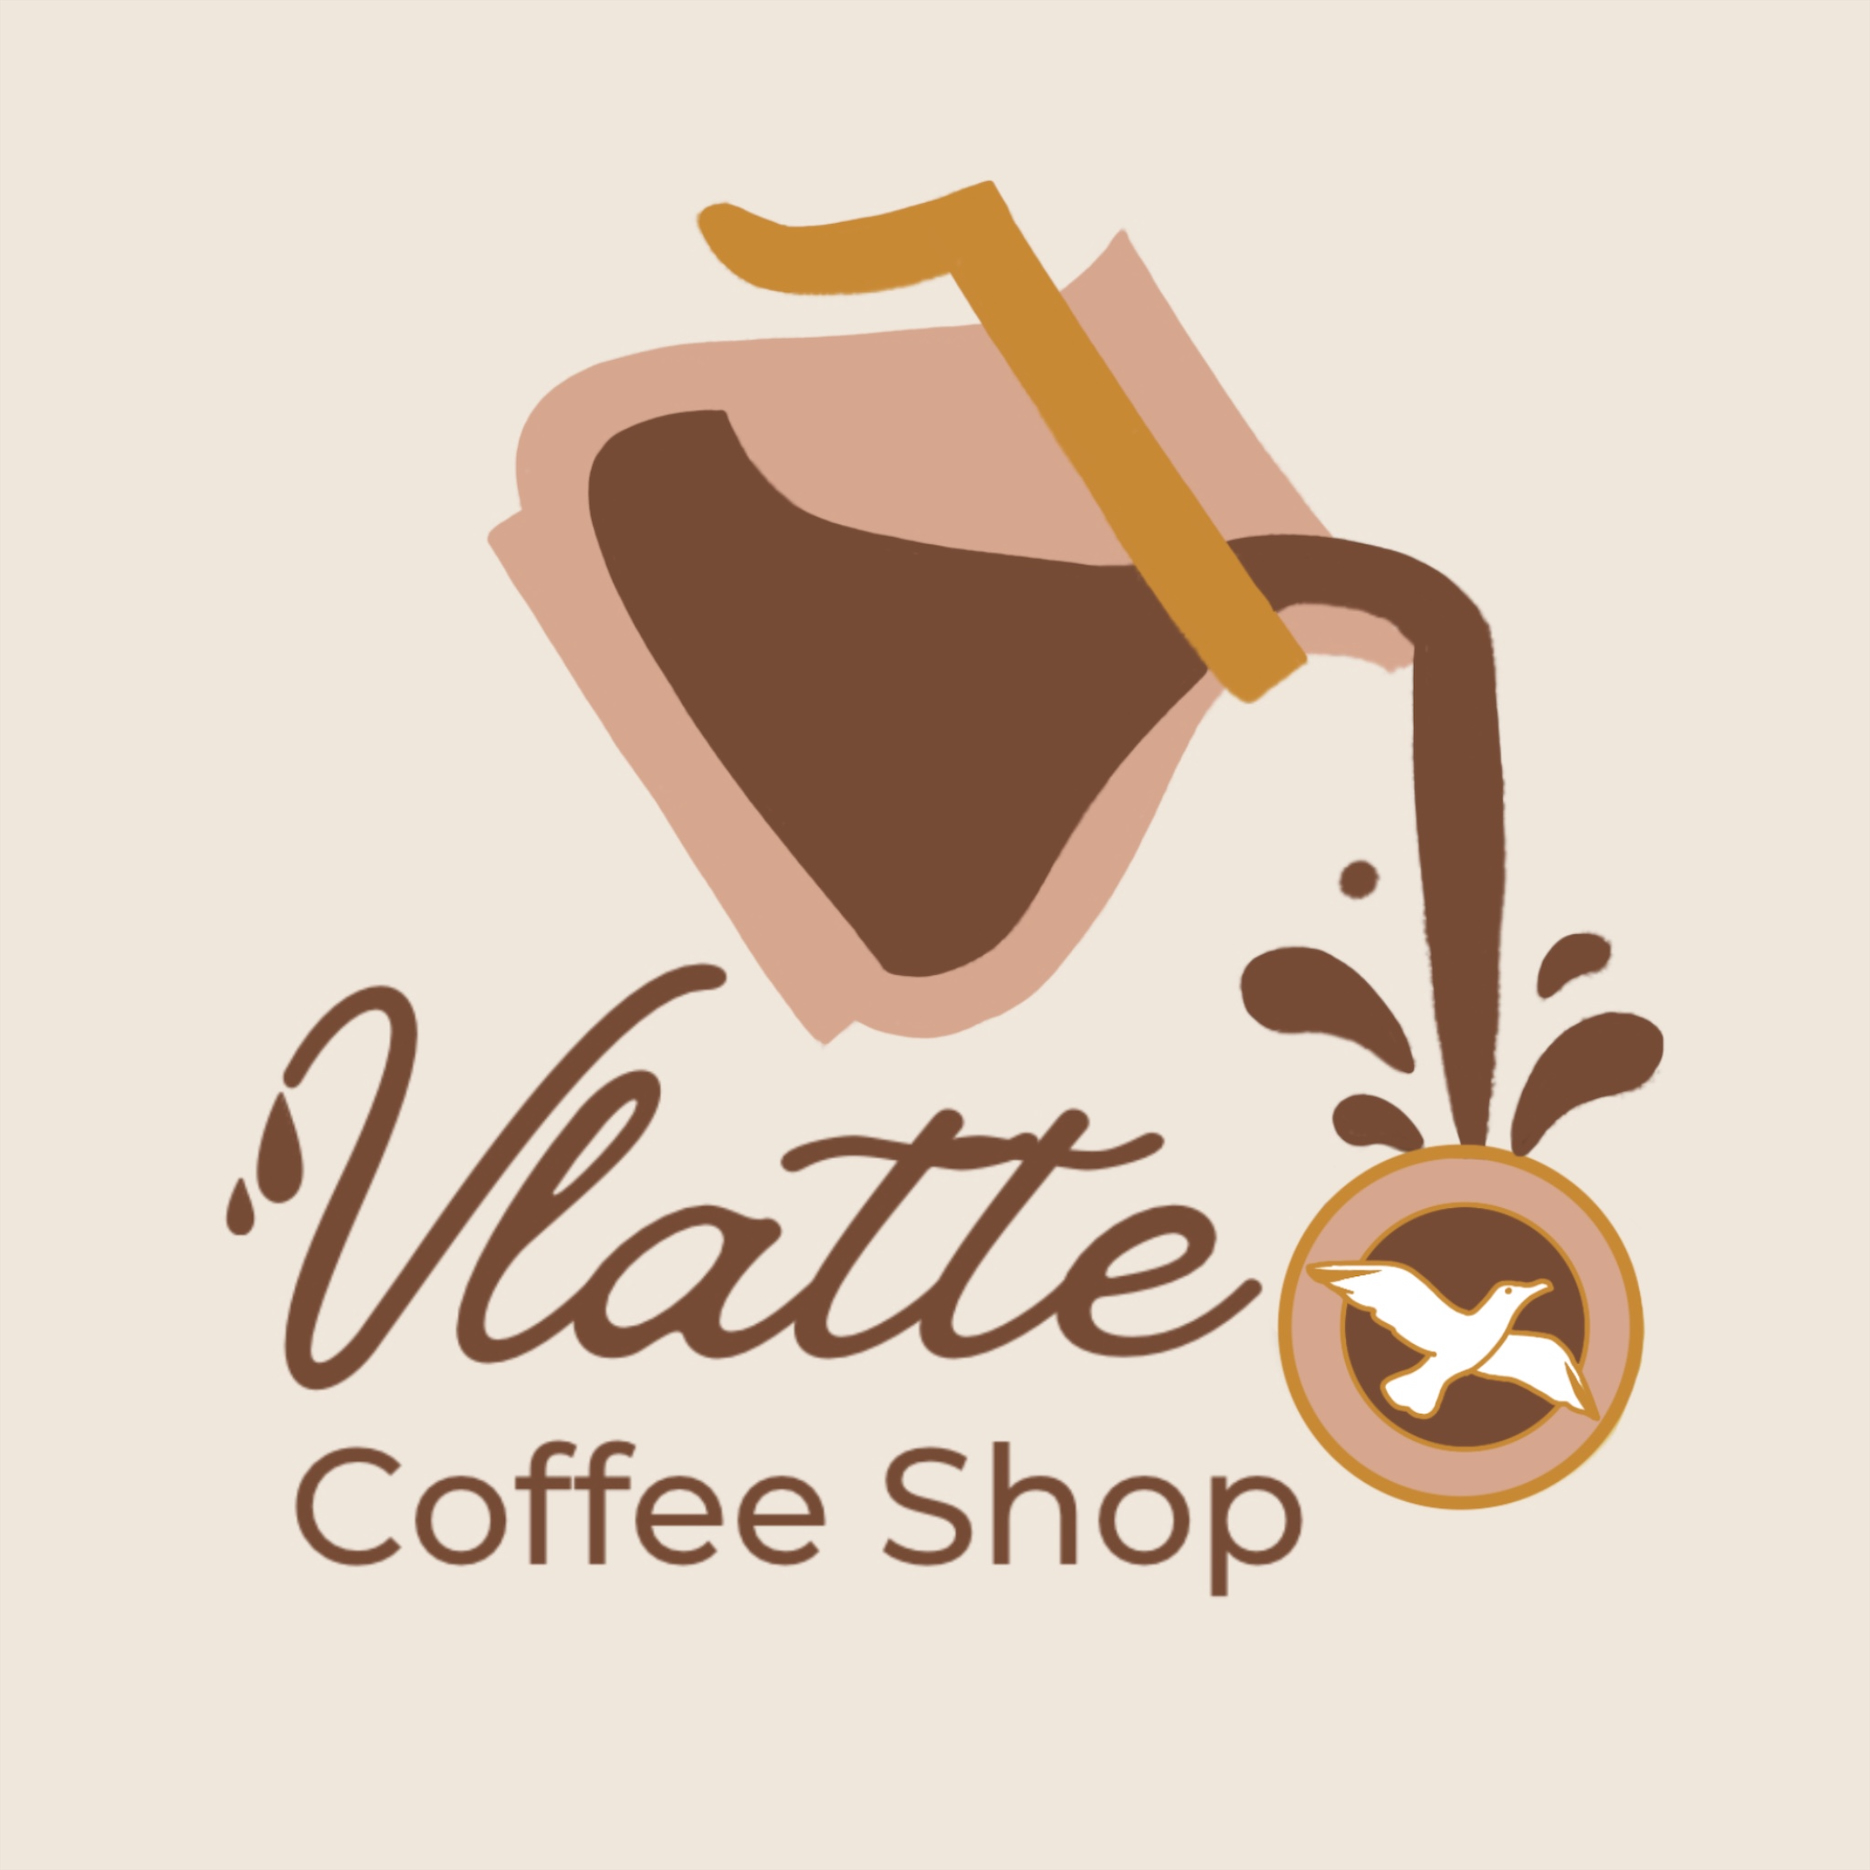 VLATTE coffee